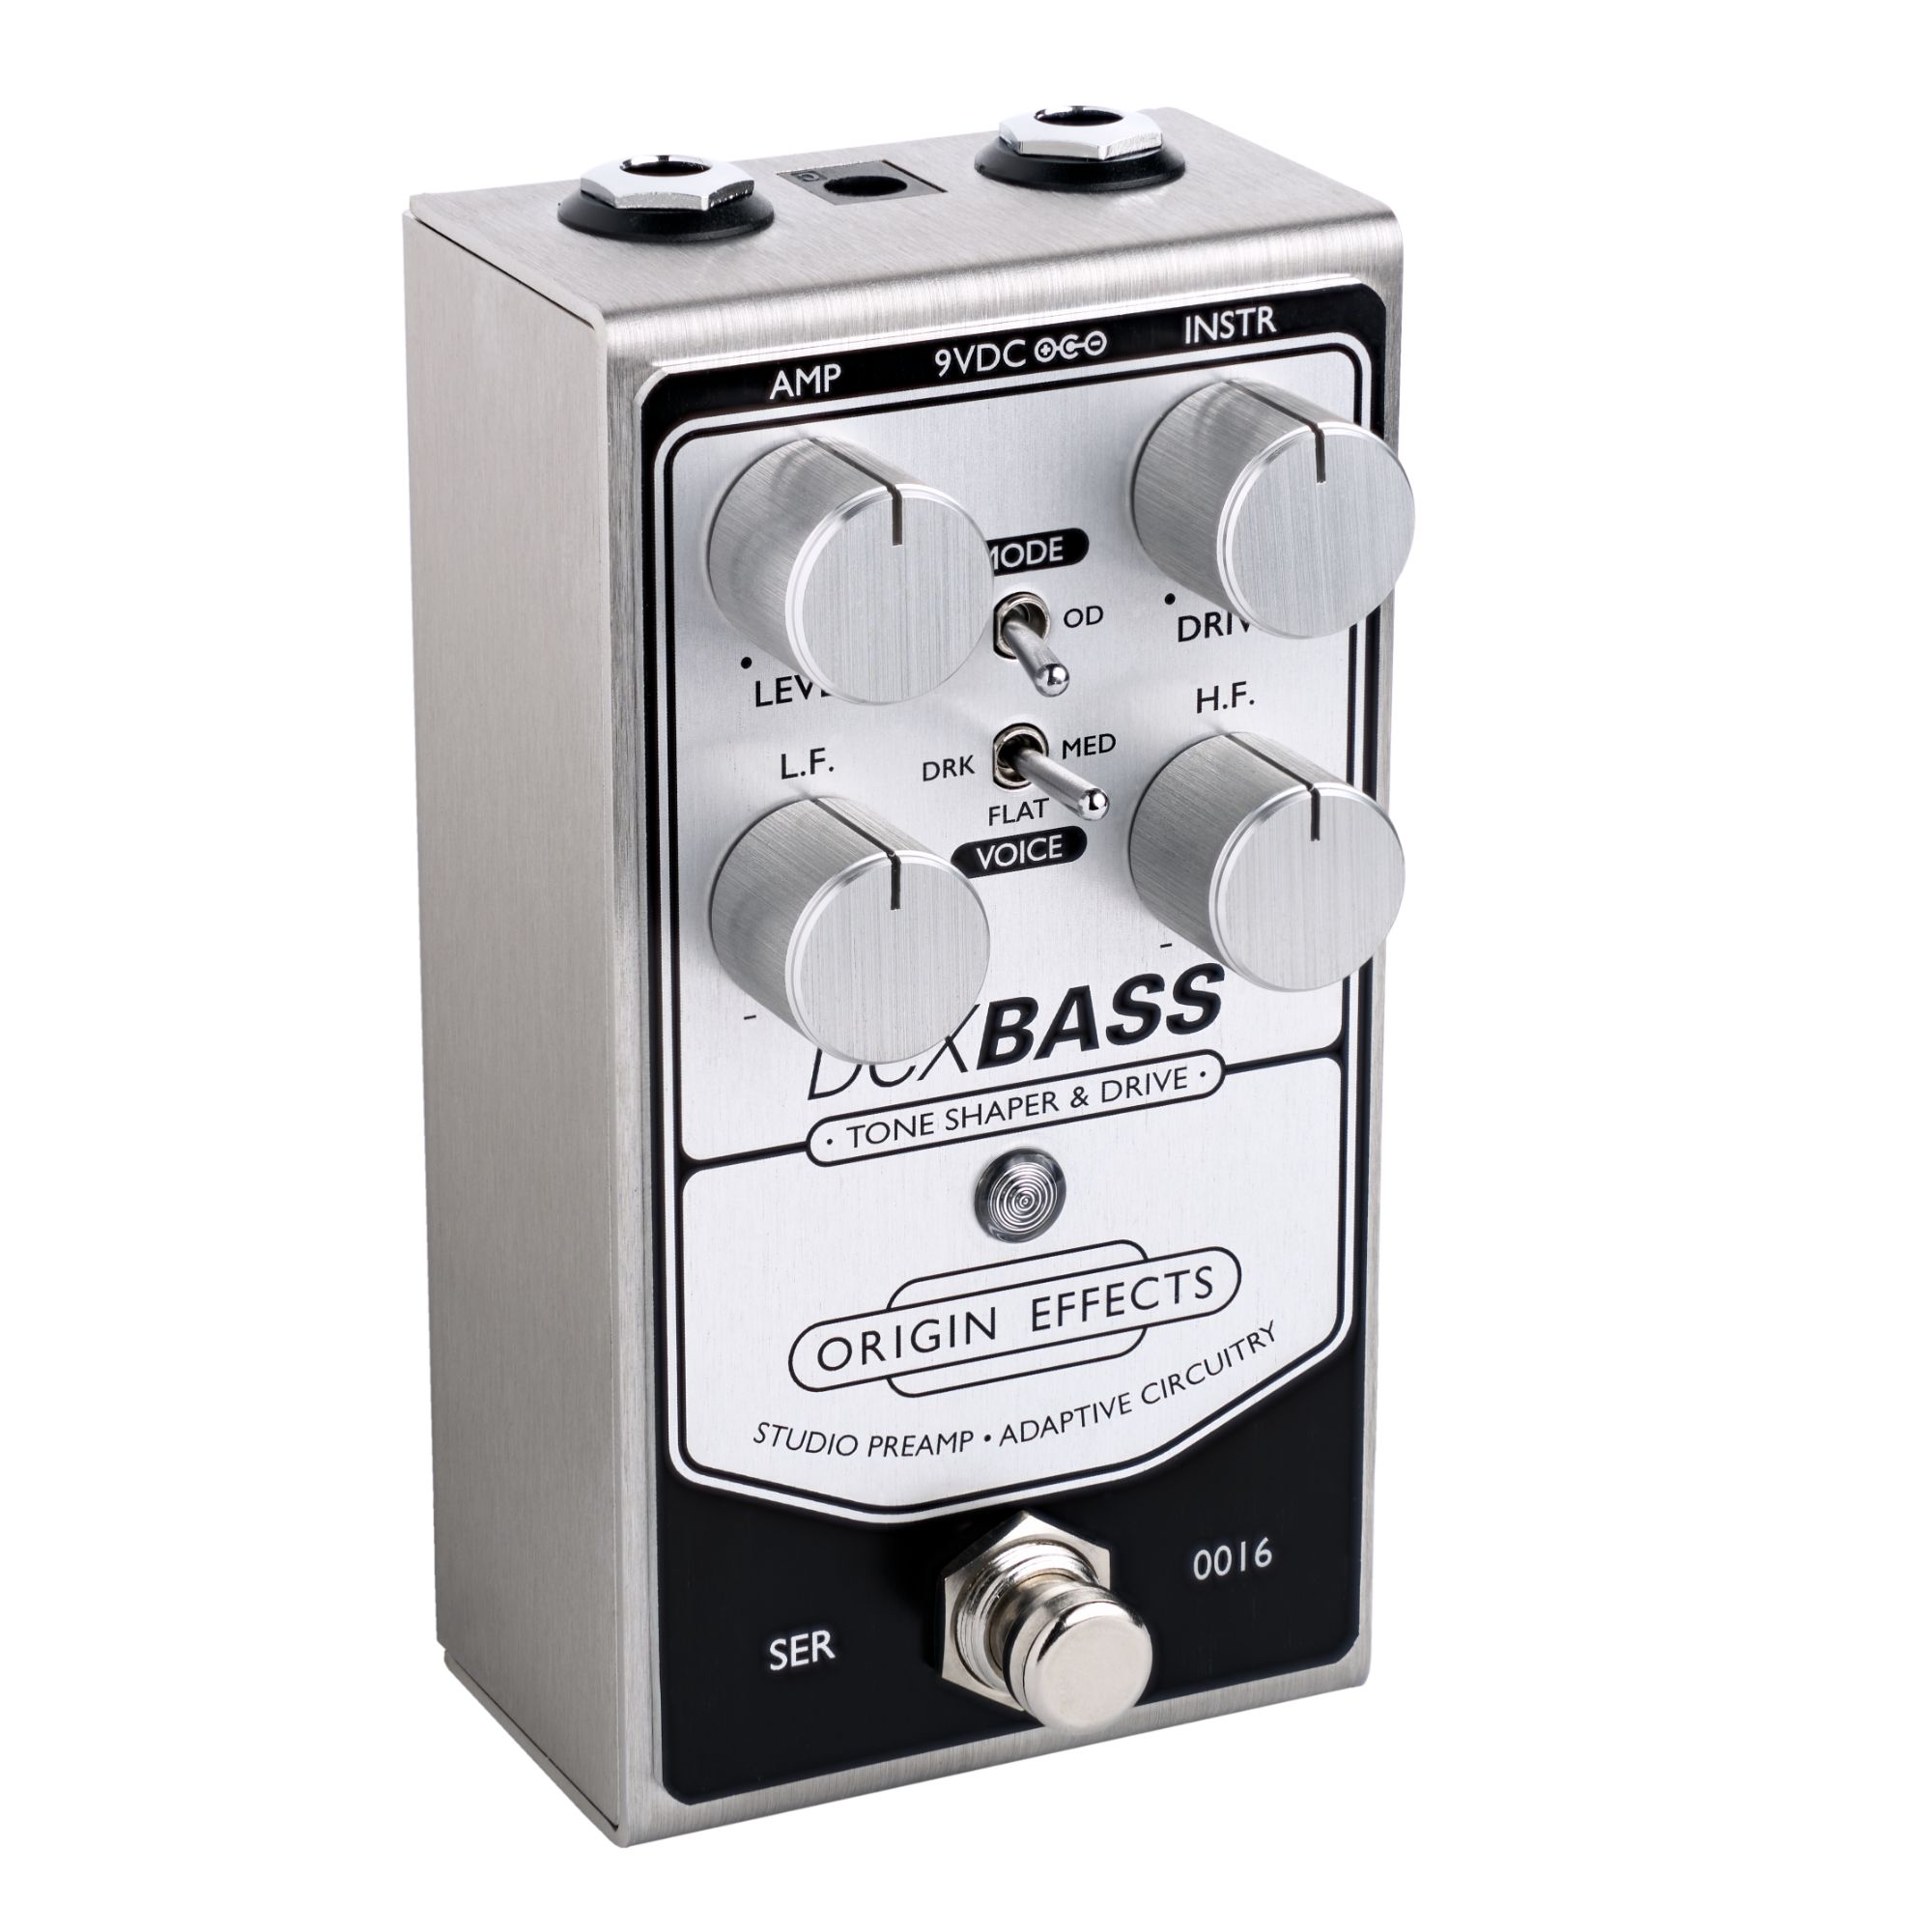 Origin Effects Dcx Bass - Kompressor/Sustain/Noise gate Effektpedal - Variation 1